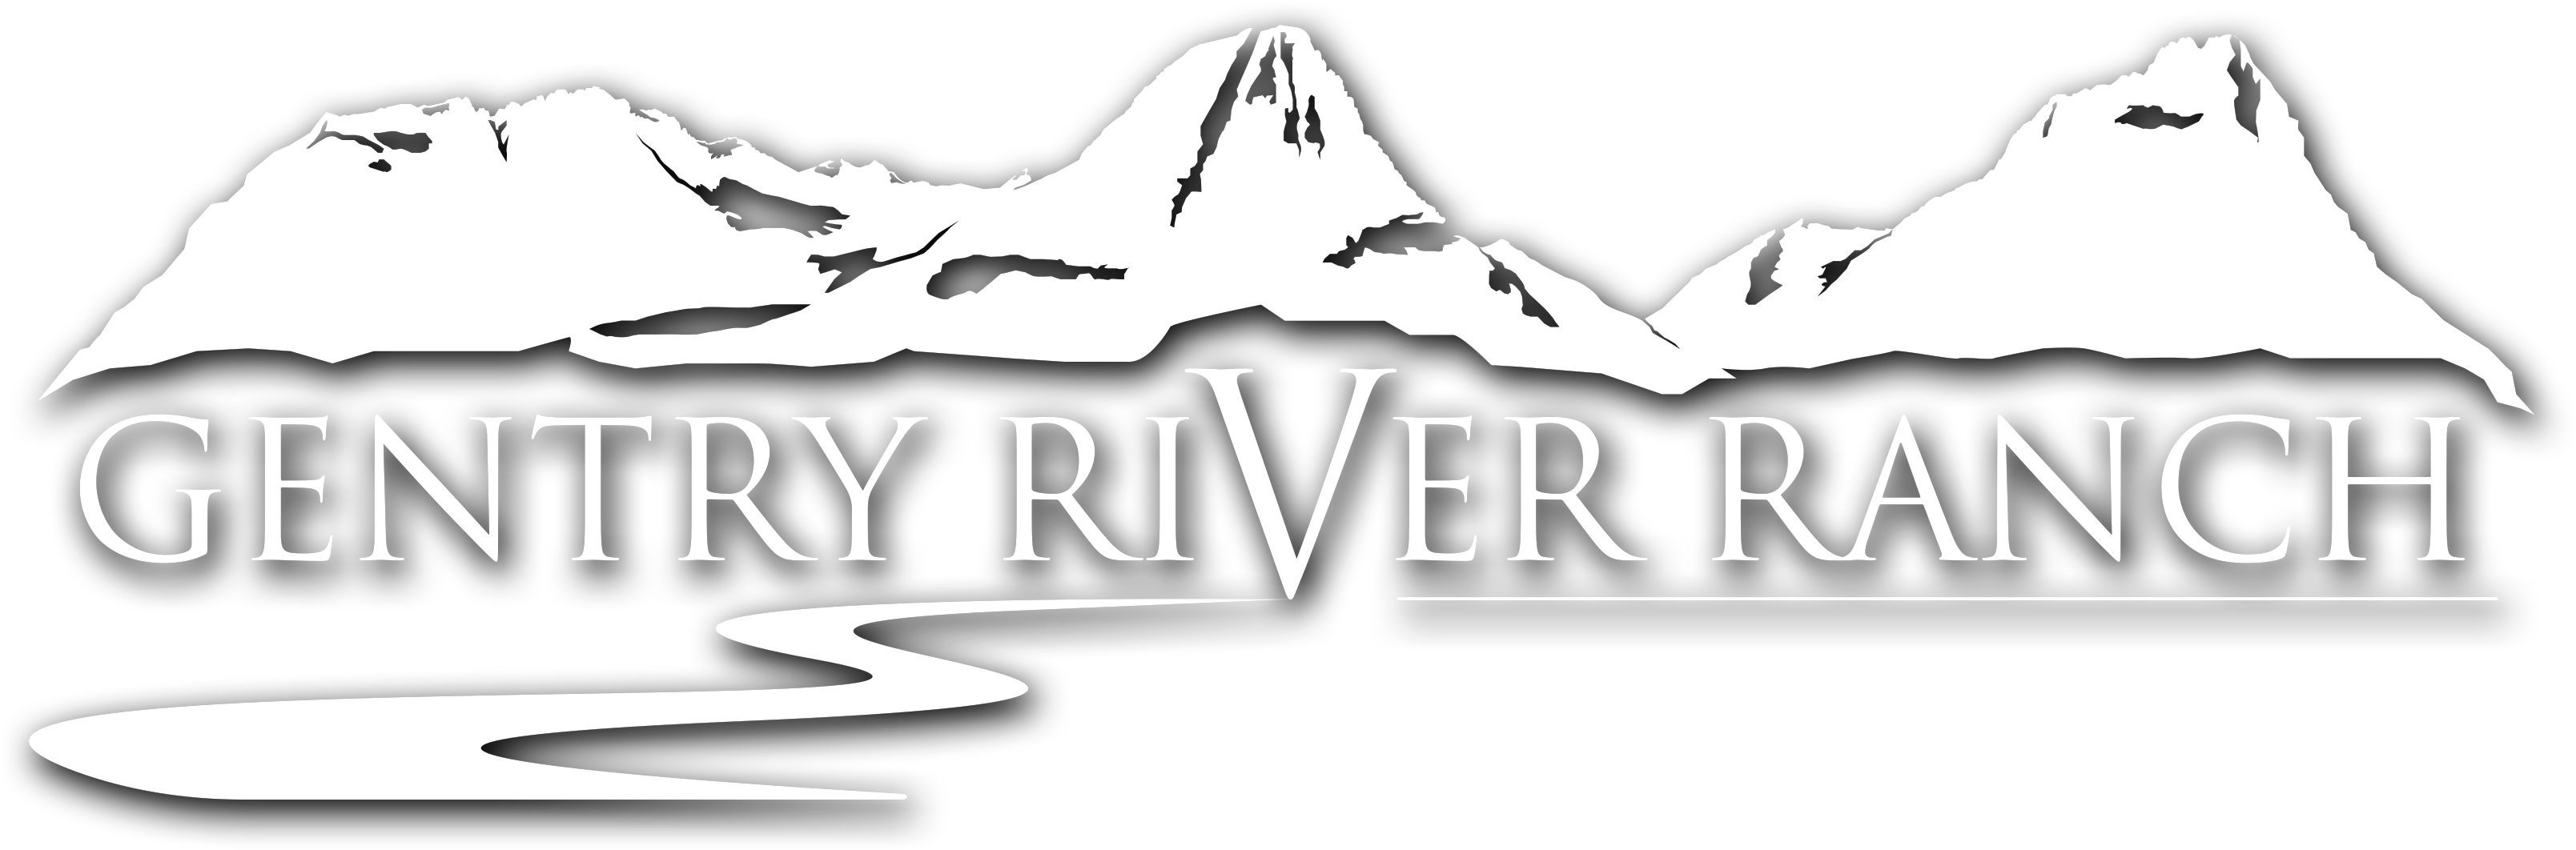 Gentry River Ranch Logo PNG